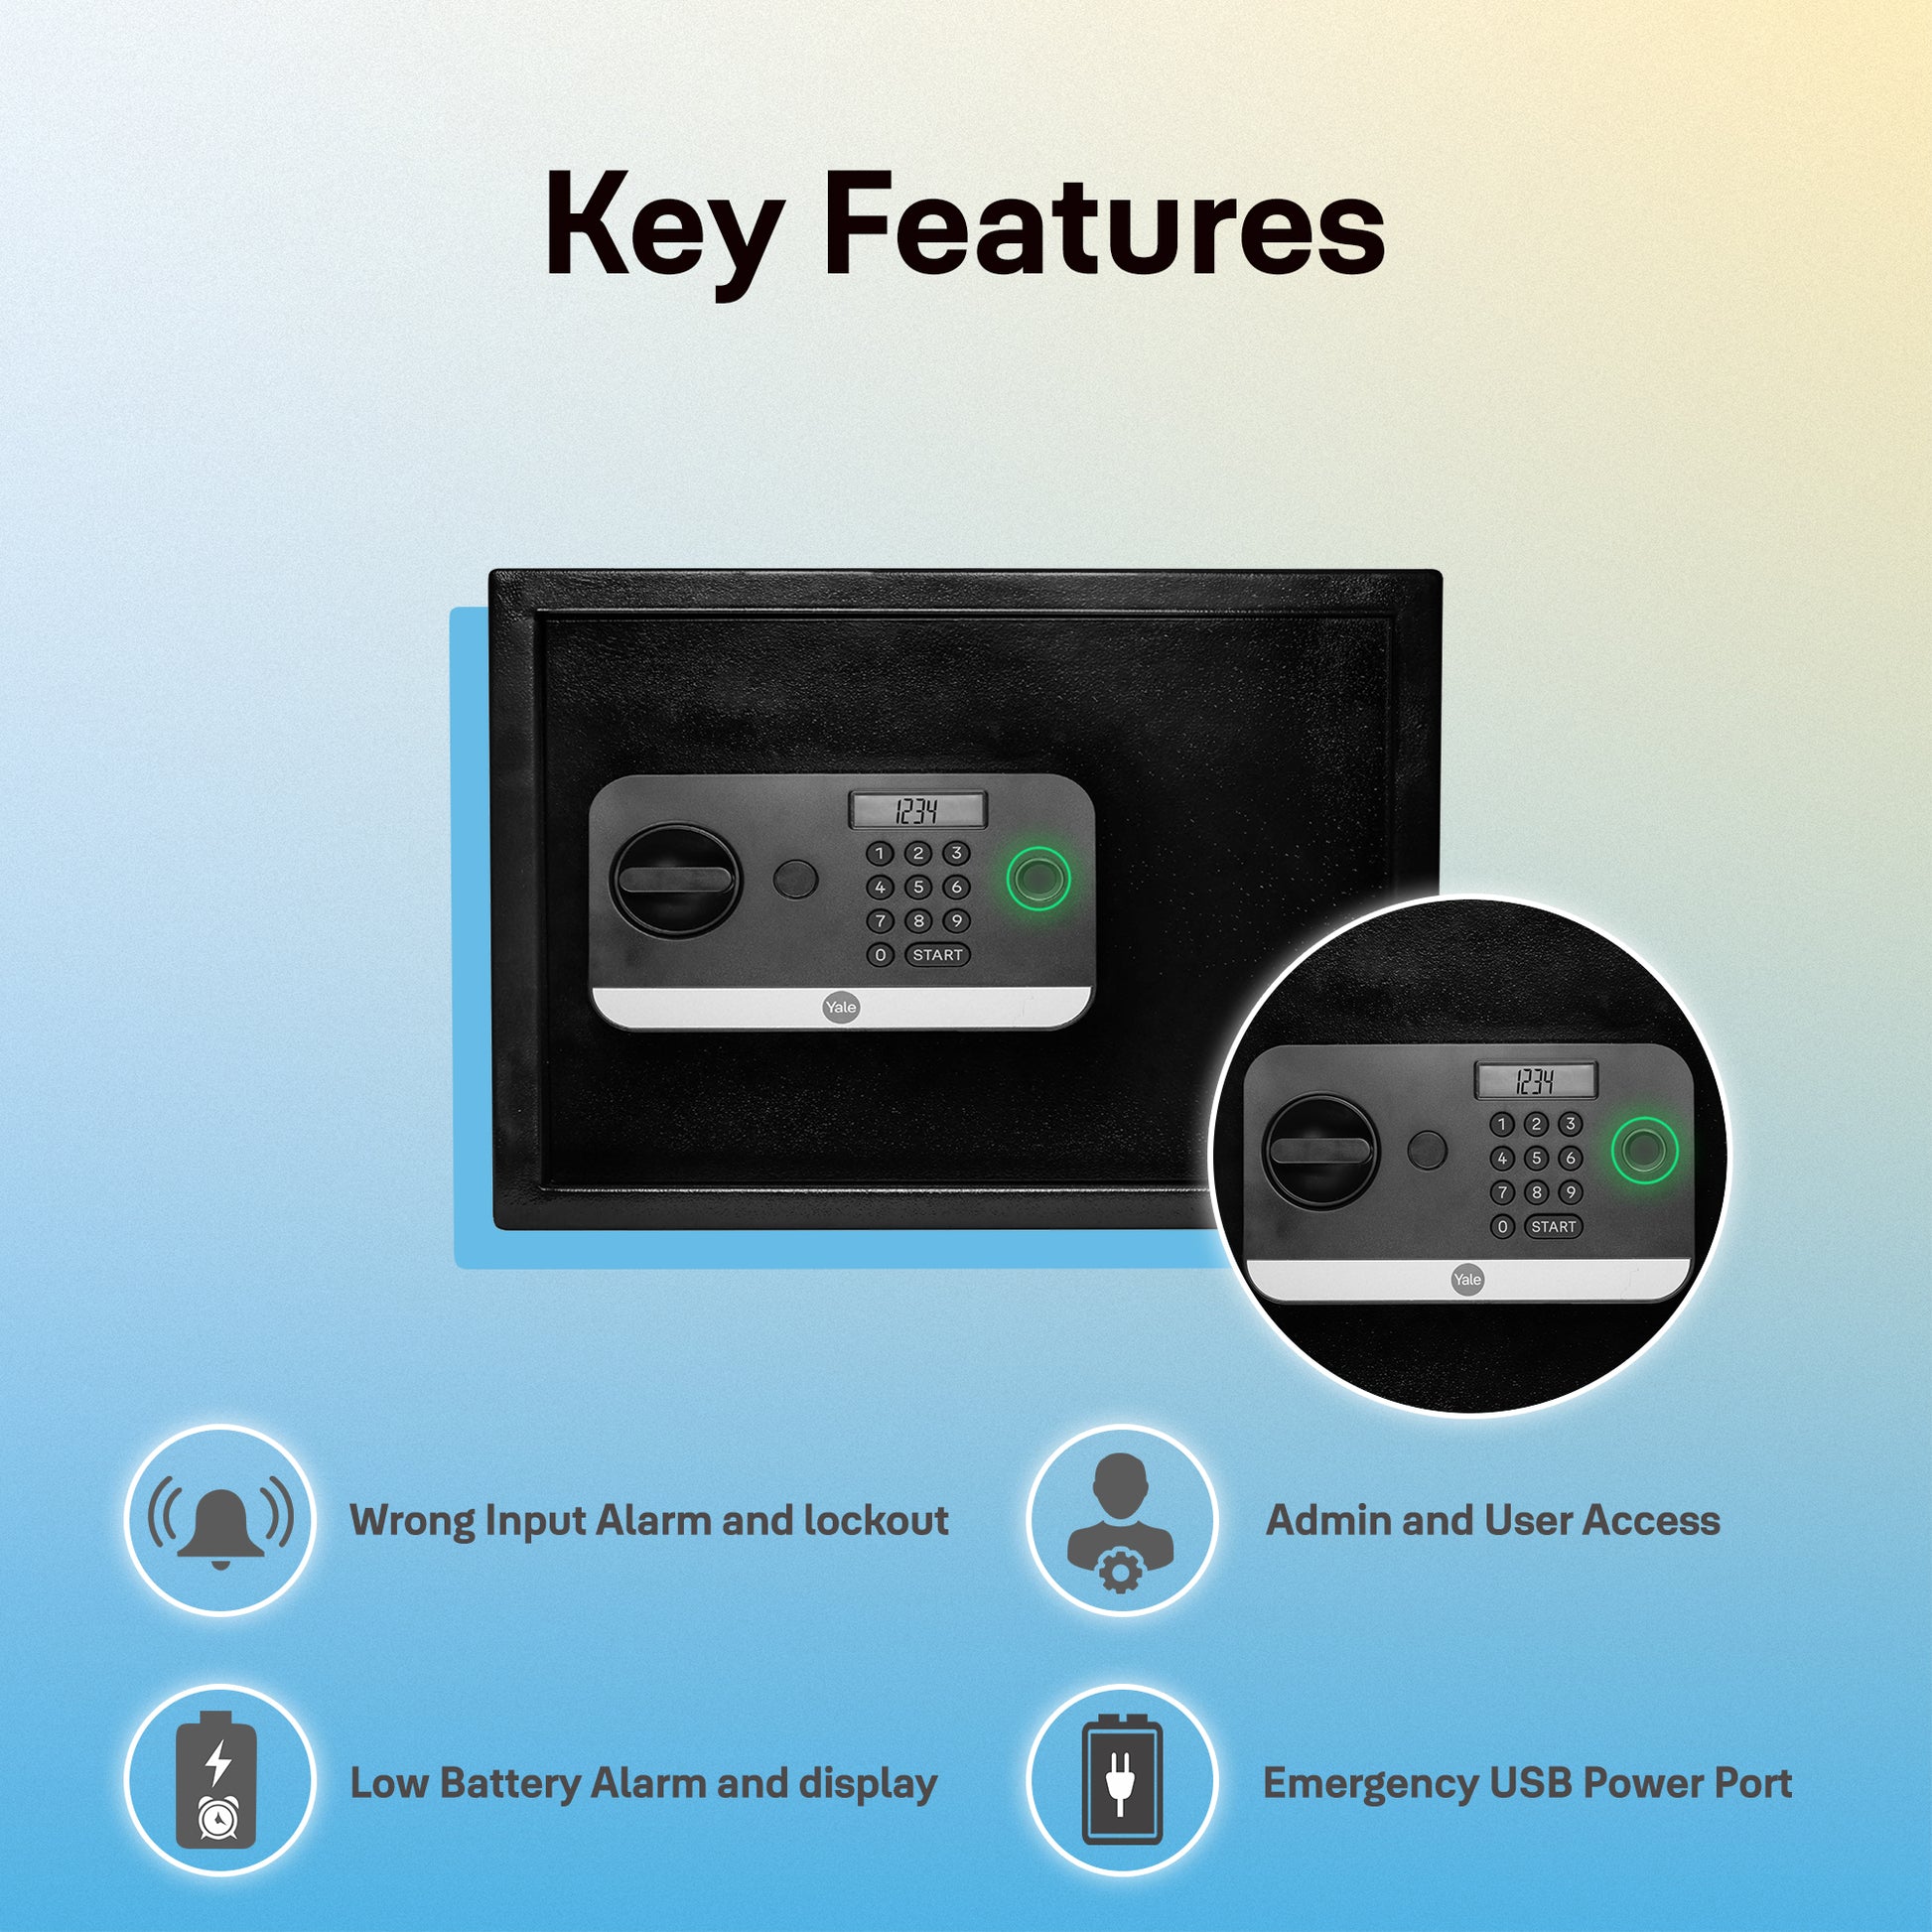 Stellar fingerprint Locker key features